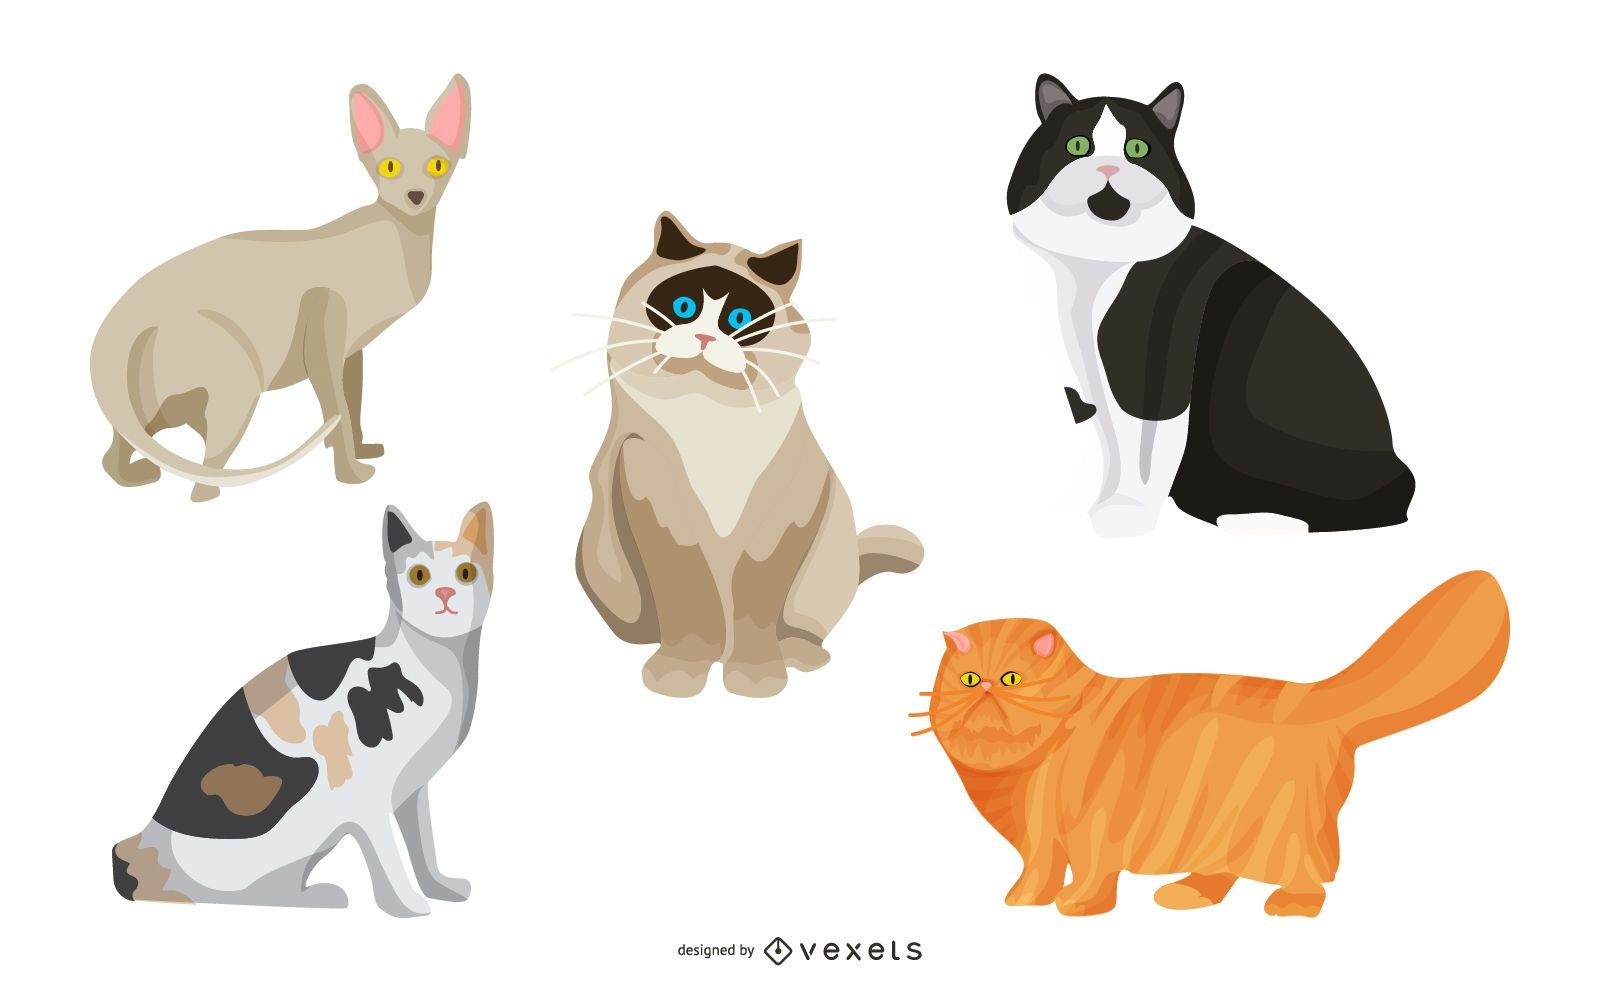 Cat illustration set